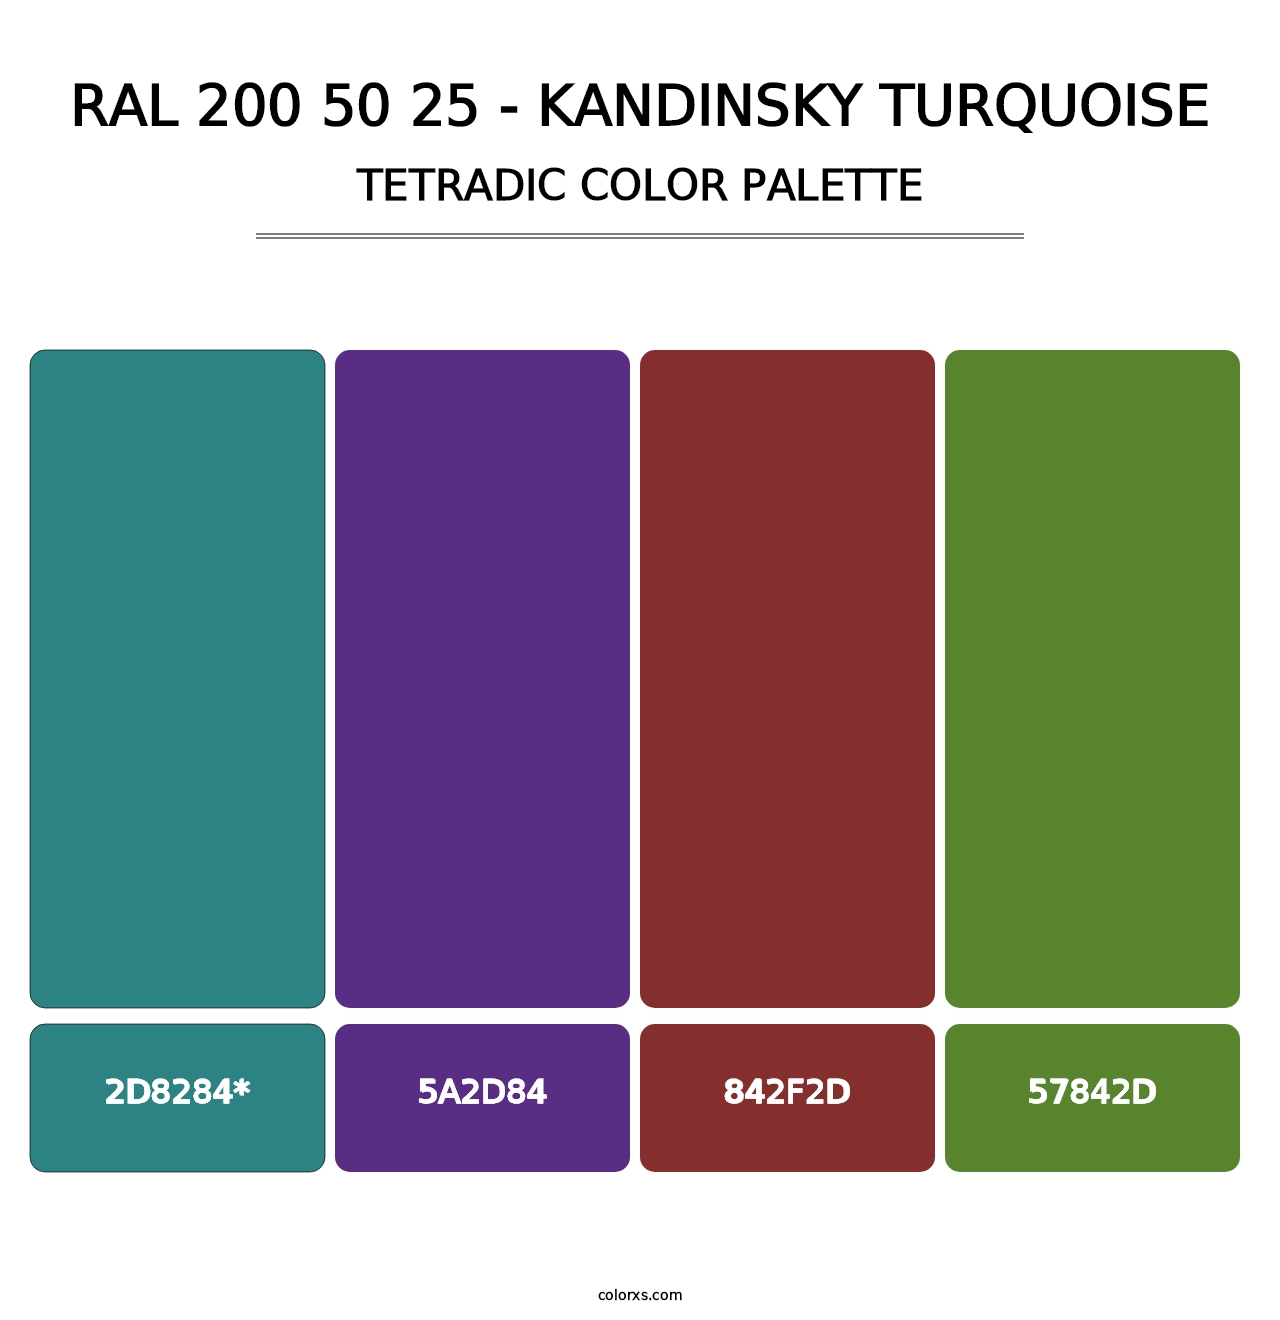 RAL 200 50 25 - Kandinsky Turquoise - Tetradic Color Palette